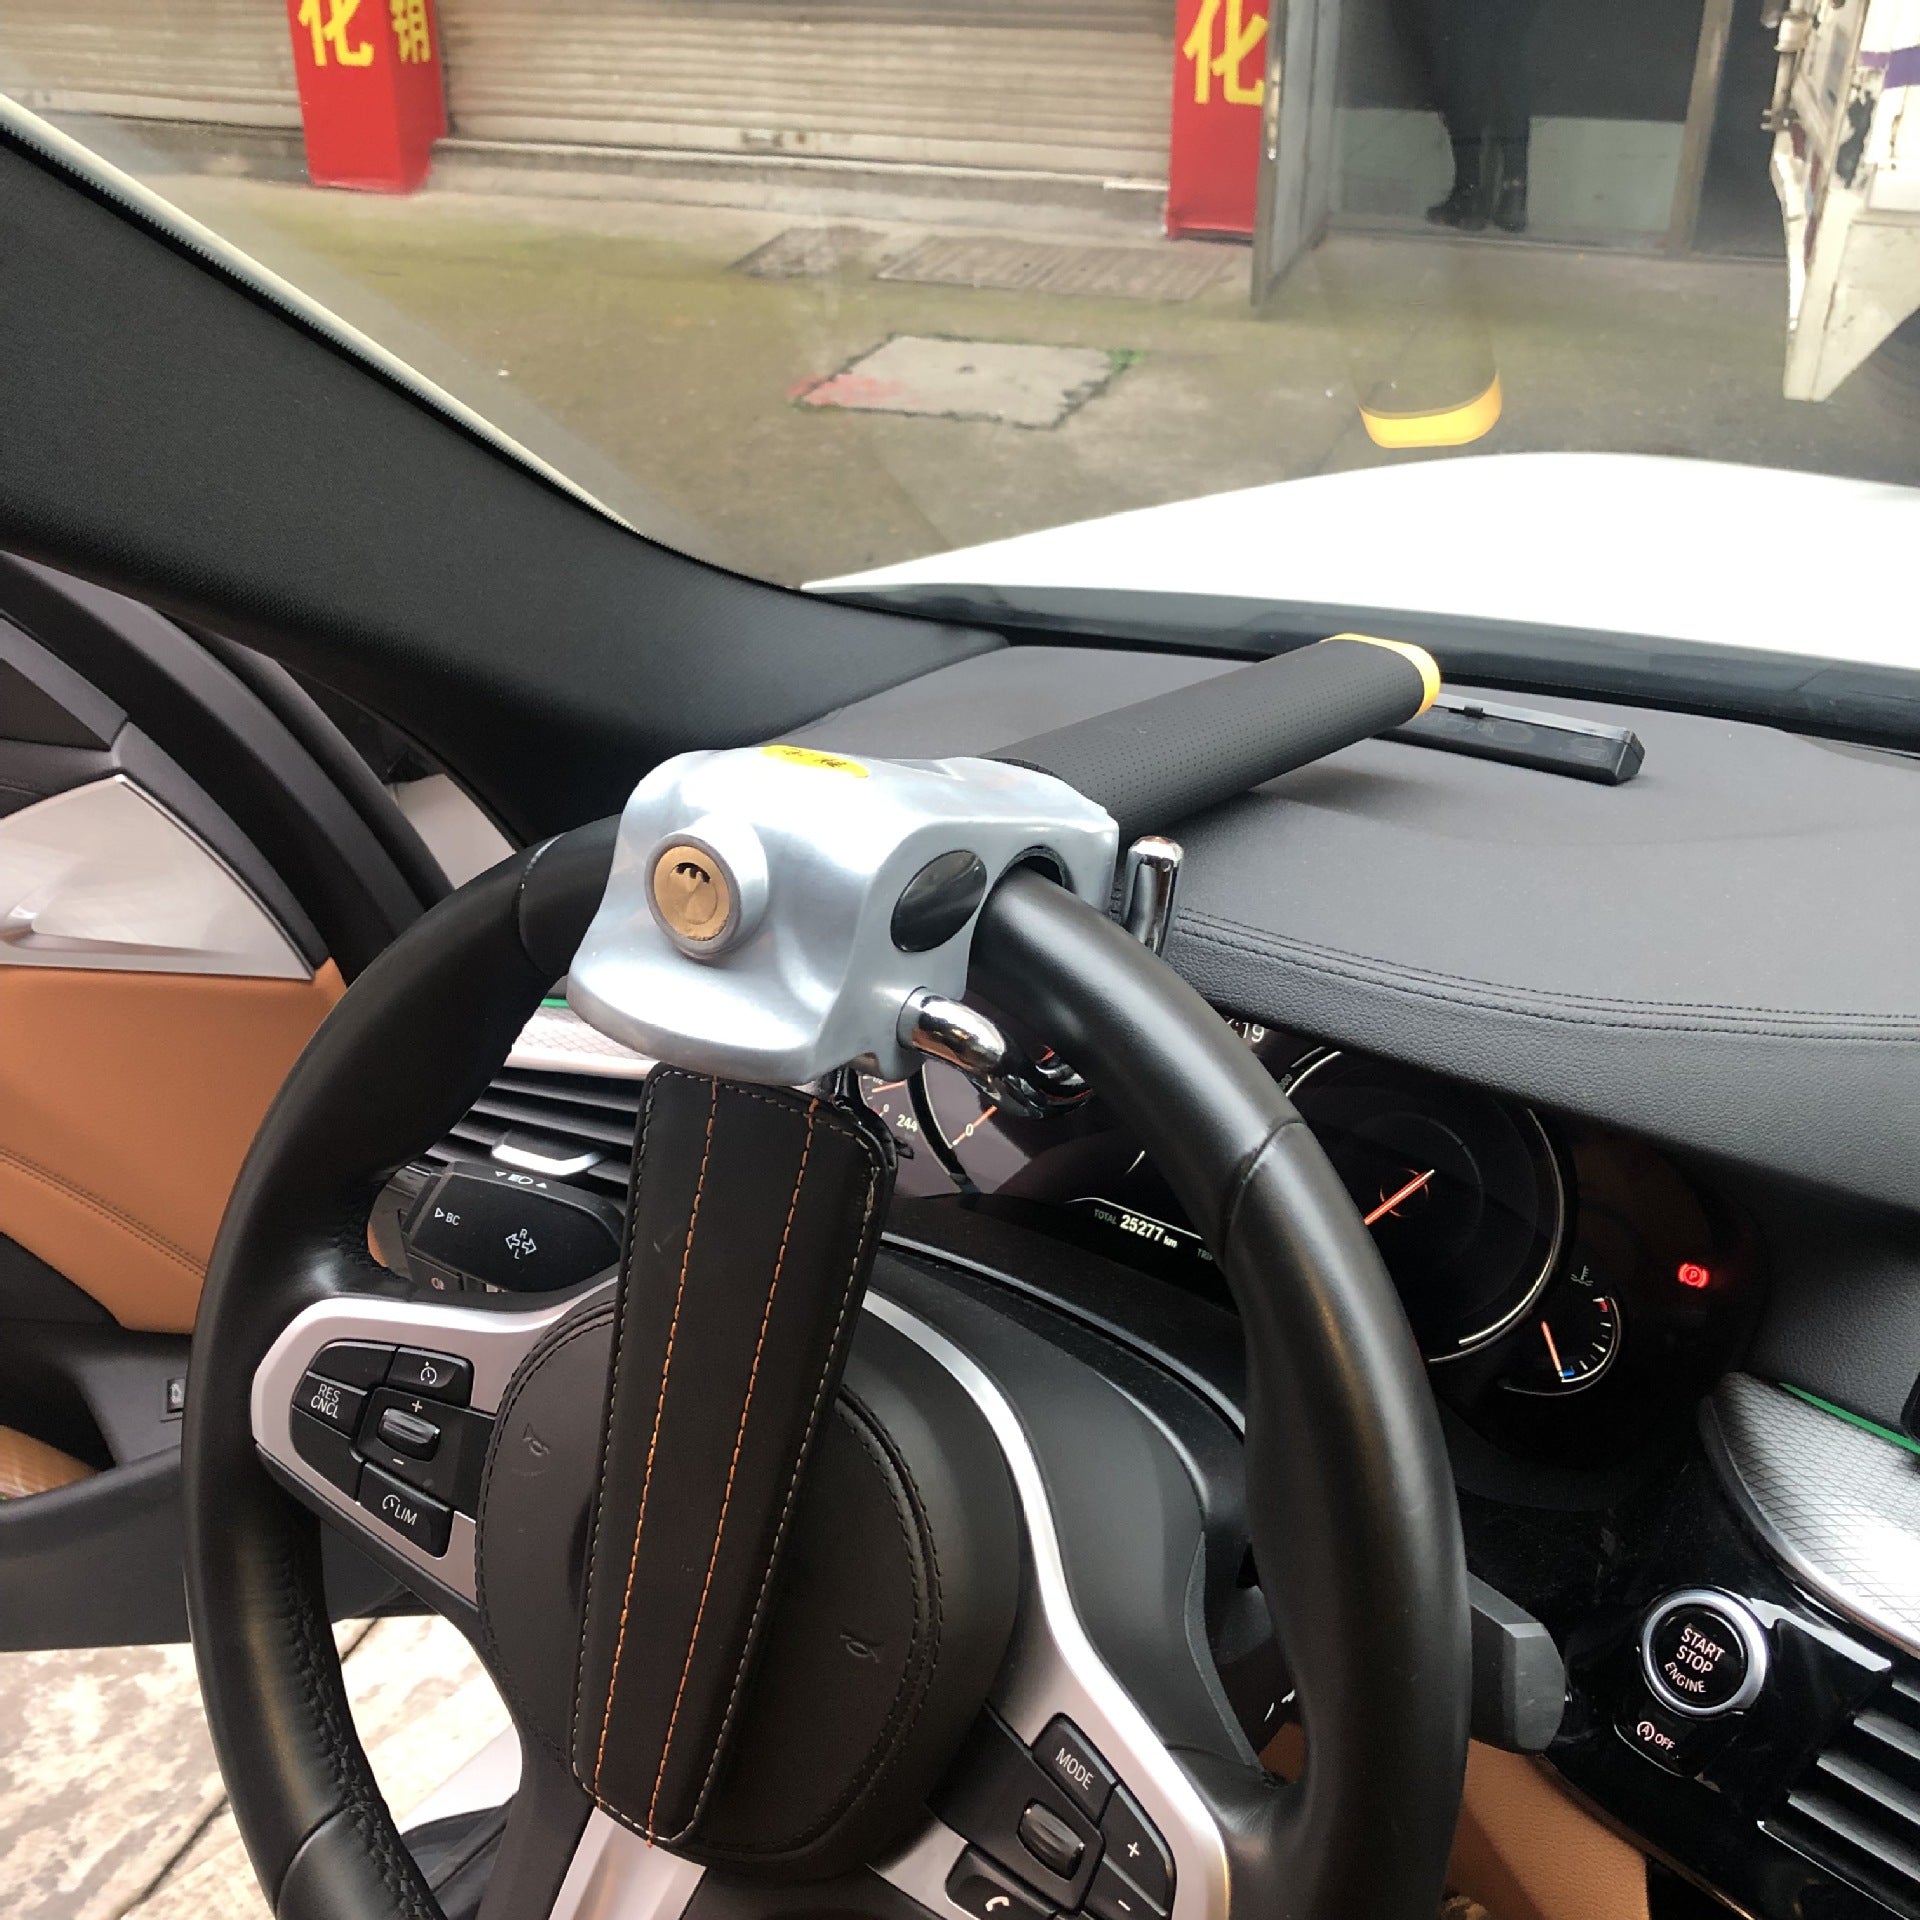 Car Steering Wheel Anti-Theft Lock - SpaceEleven